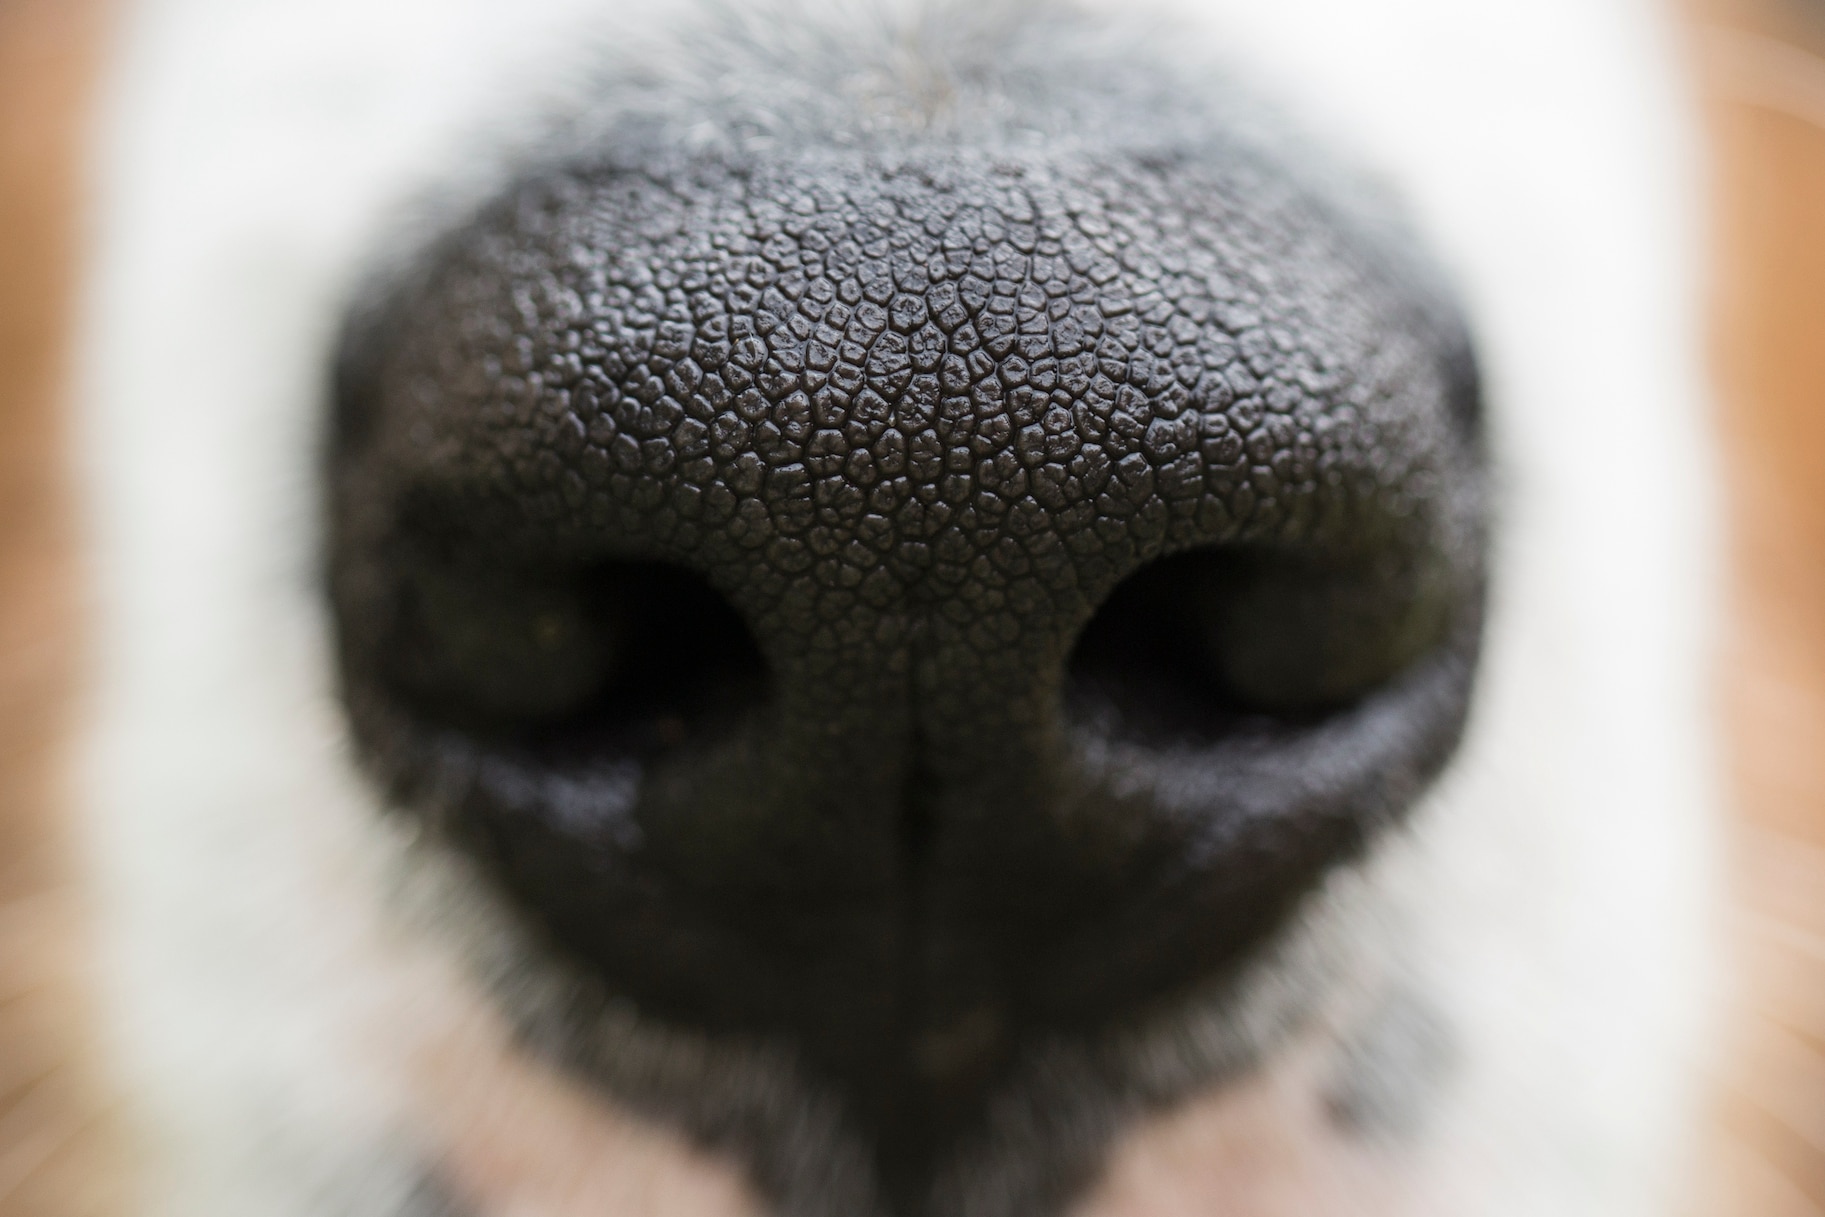 Bernese Mountain Dog puppy nose